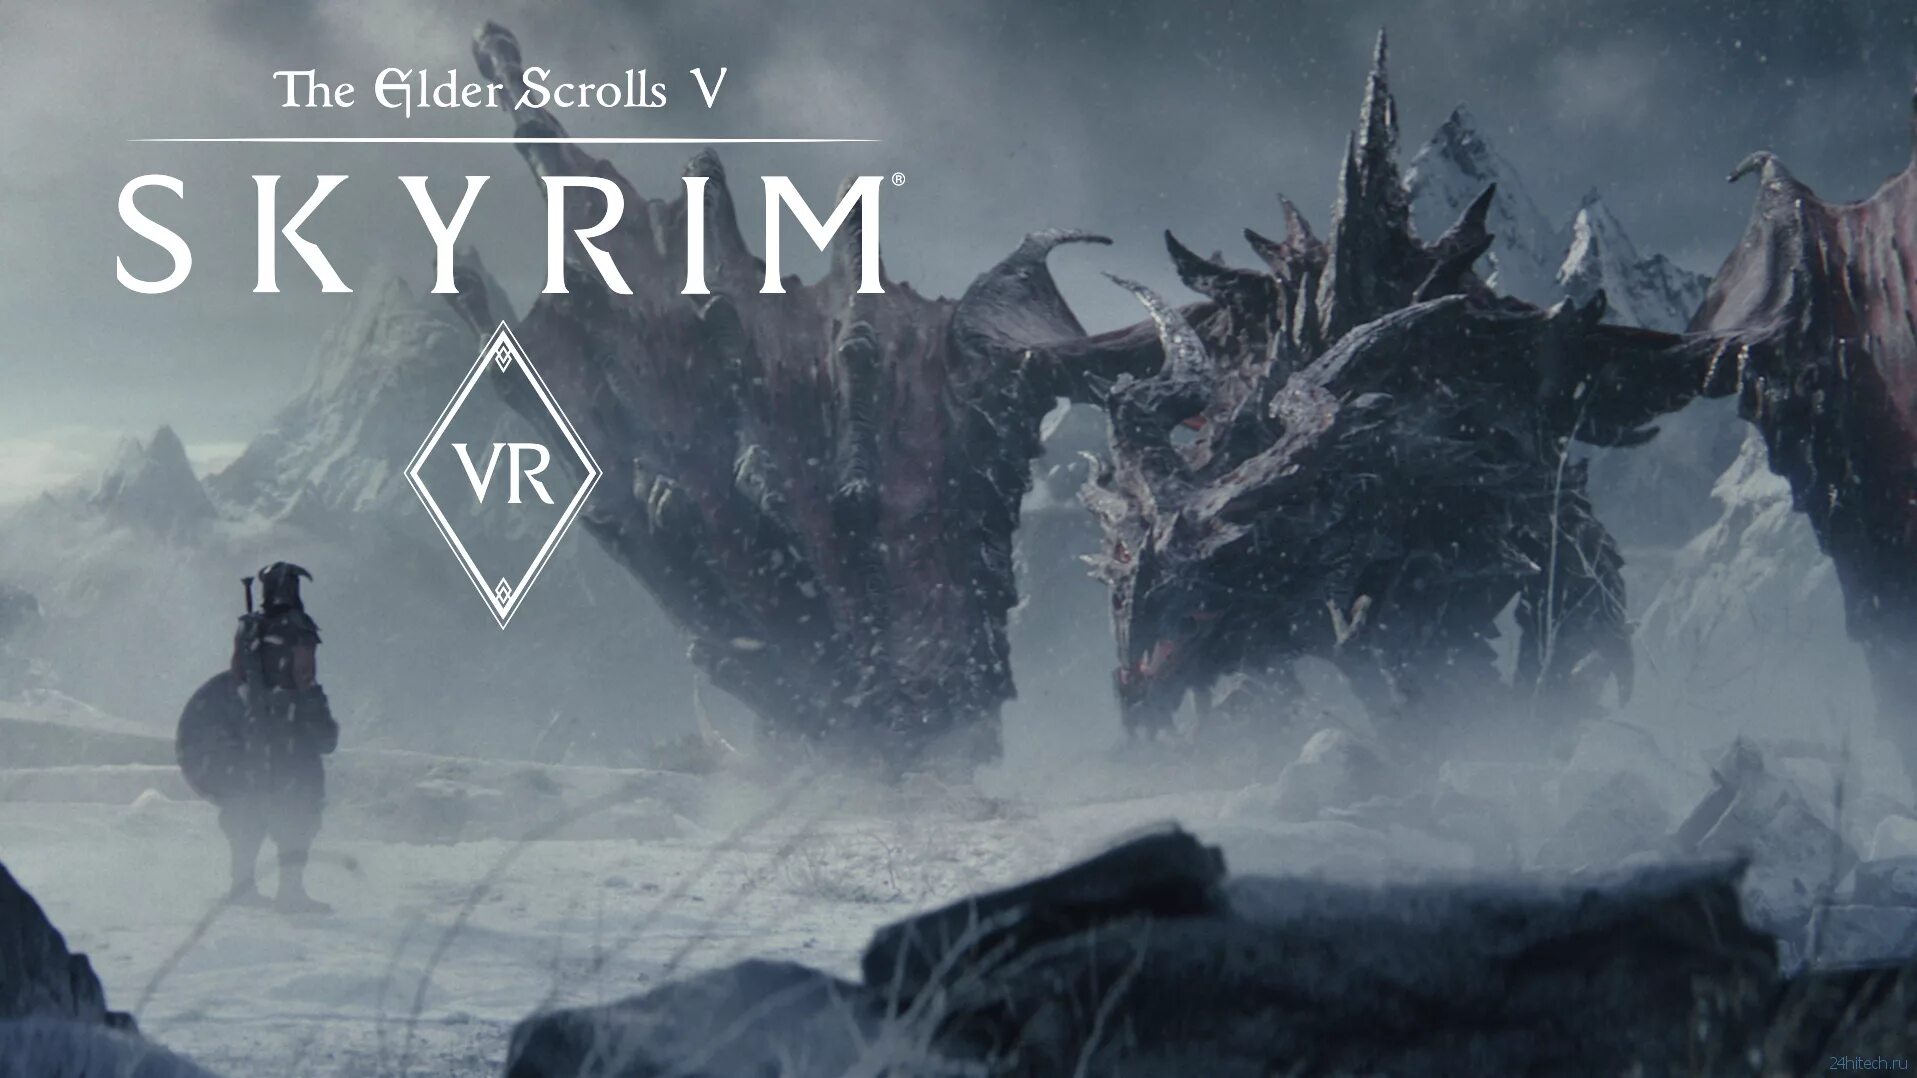 Elder scrolls skyrim vr. The Elder Scrolls v: Skyrim VR. Игра Skyrim ps4. Скайрим Постер. Обложка Скайрима.